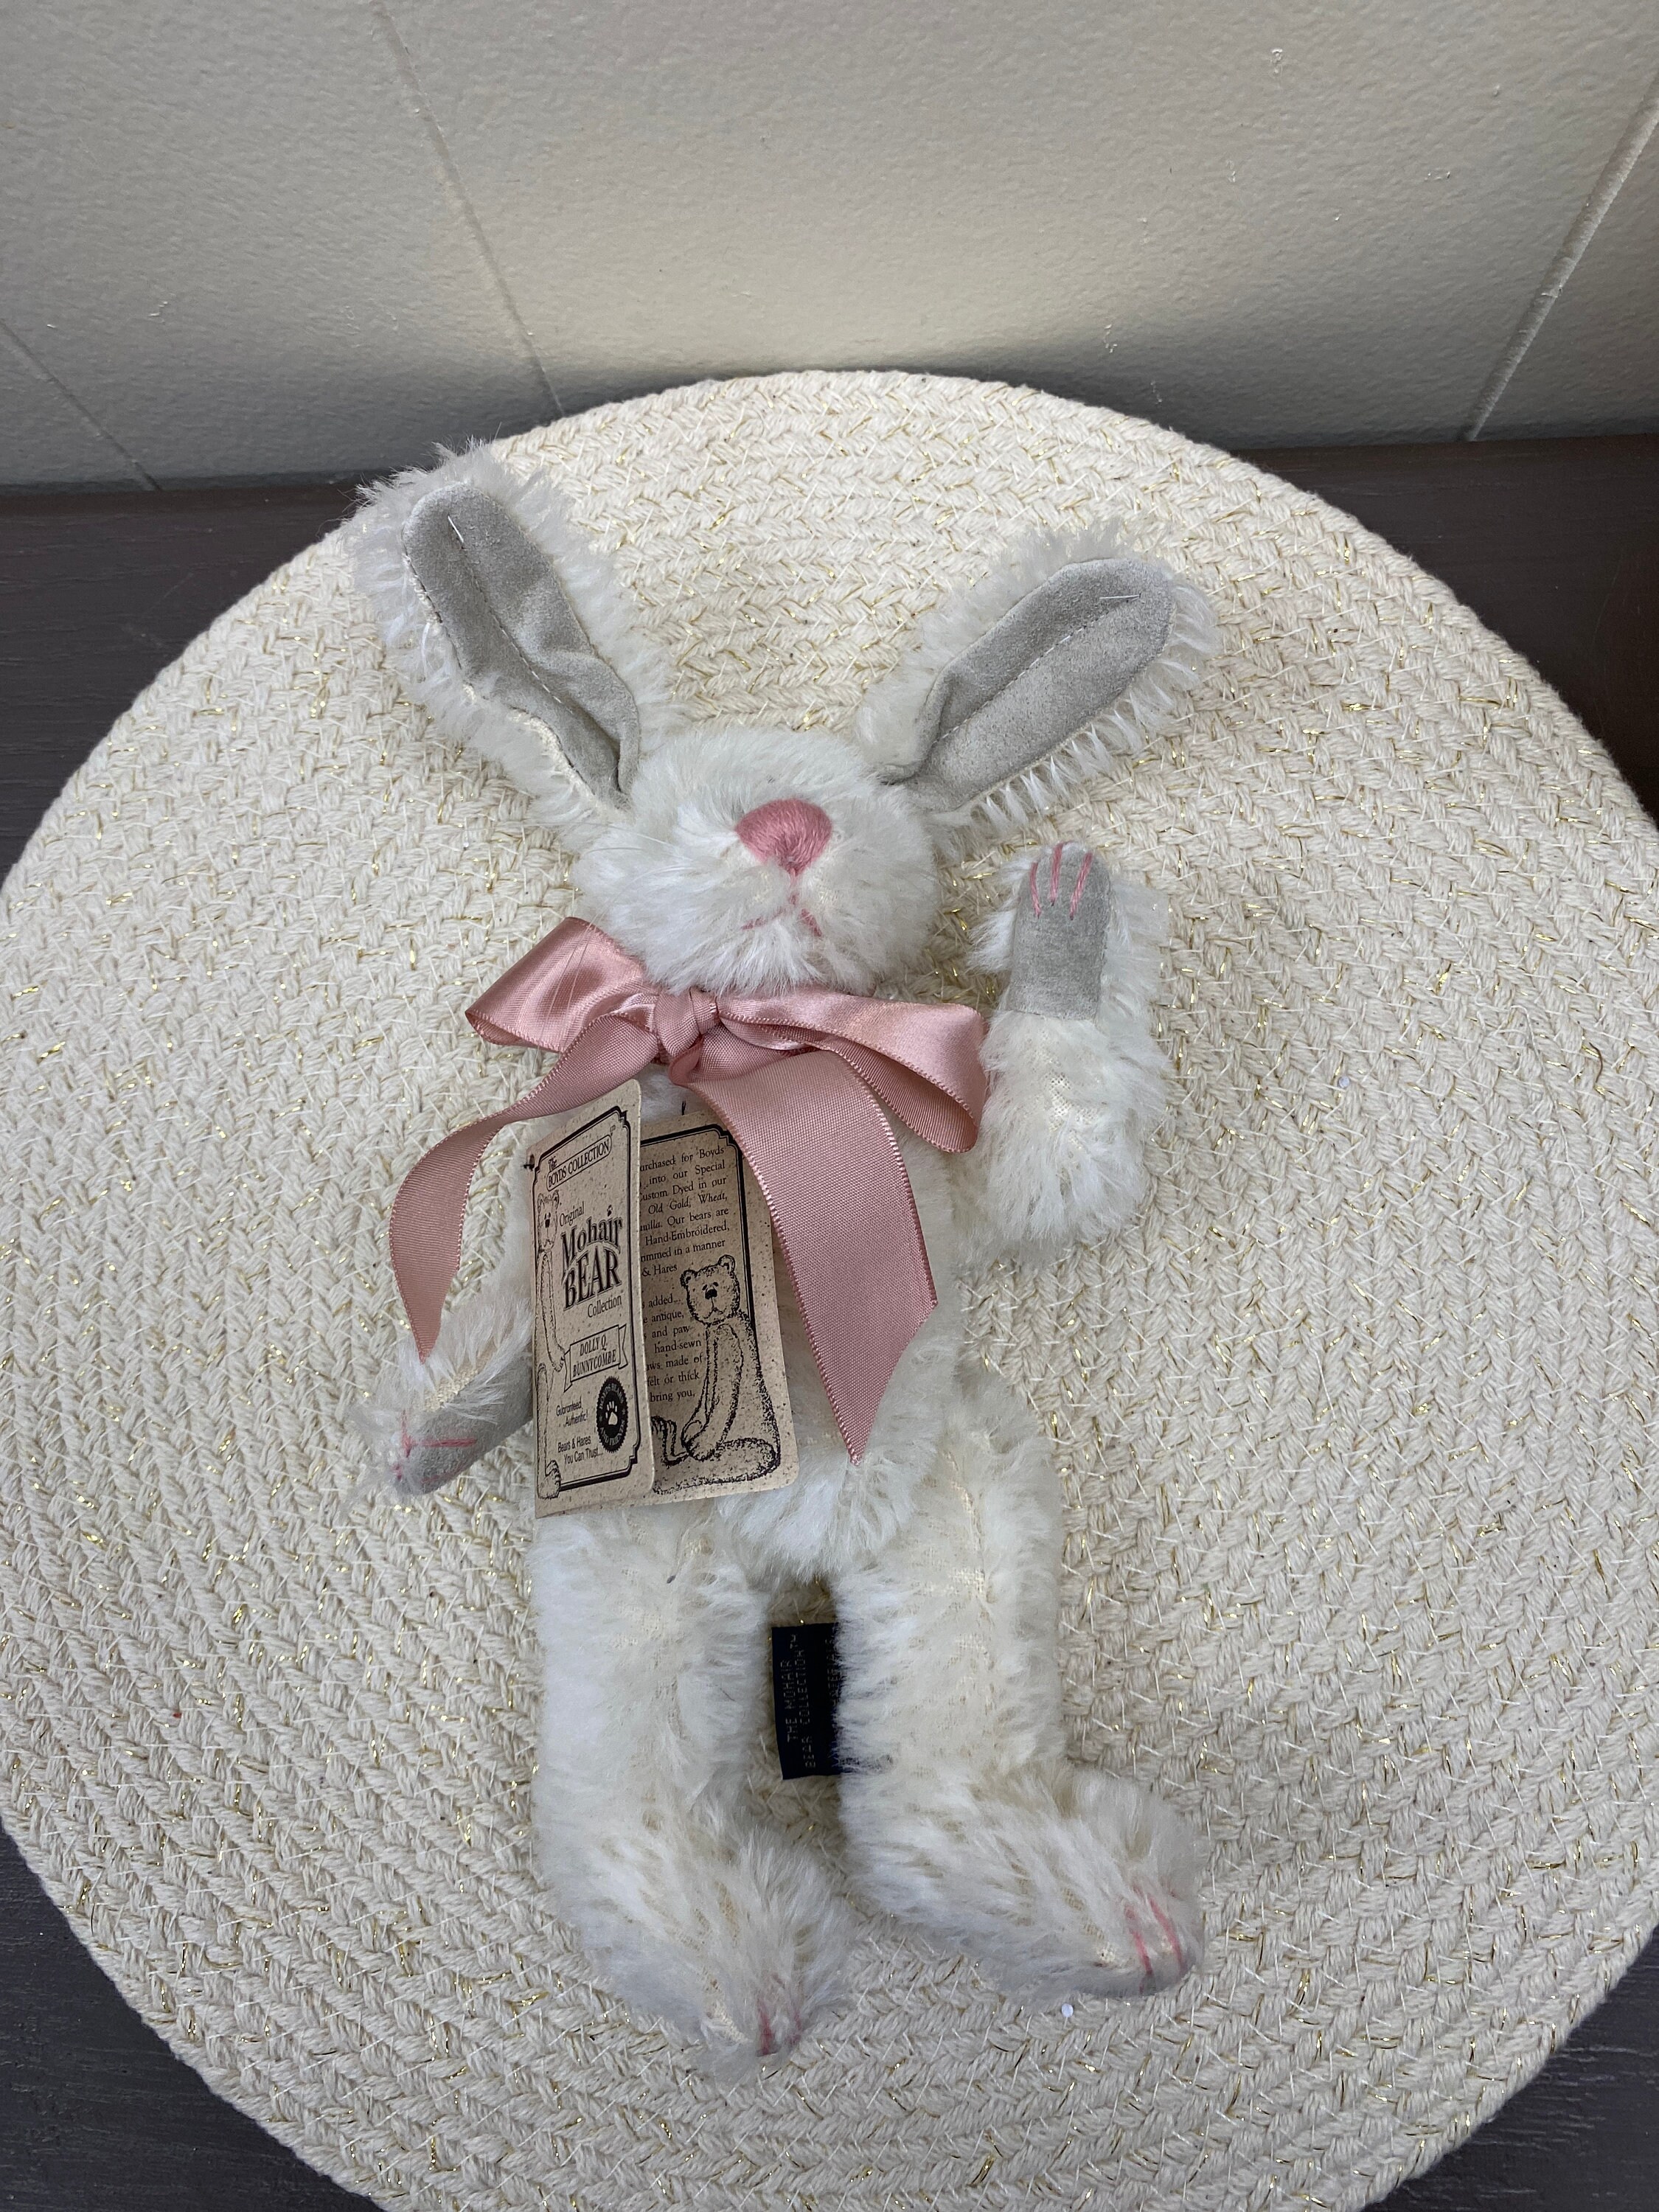 Bunny Bread Board – FROM: Susie